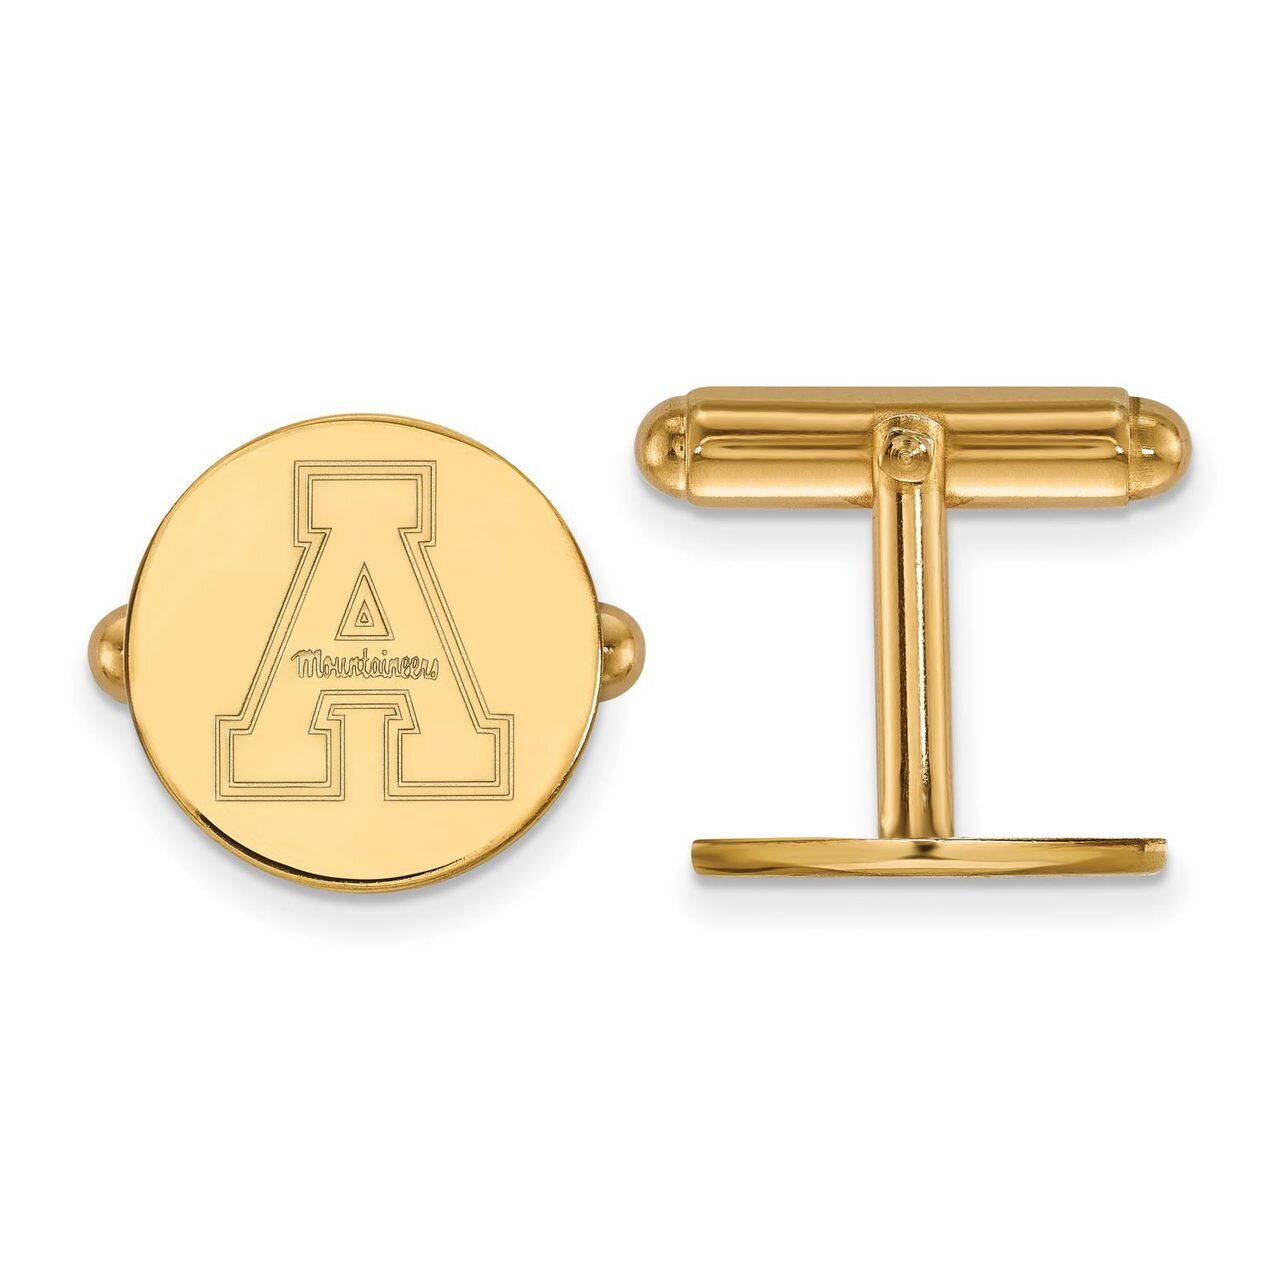 Appalachian State University Cufflinks Gold-plated Silver GP010APS